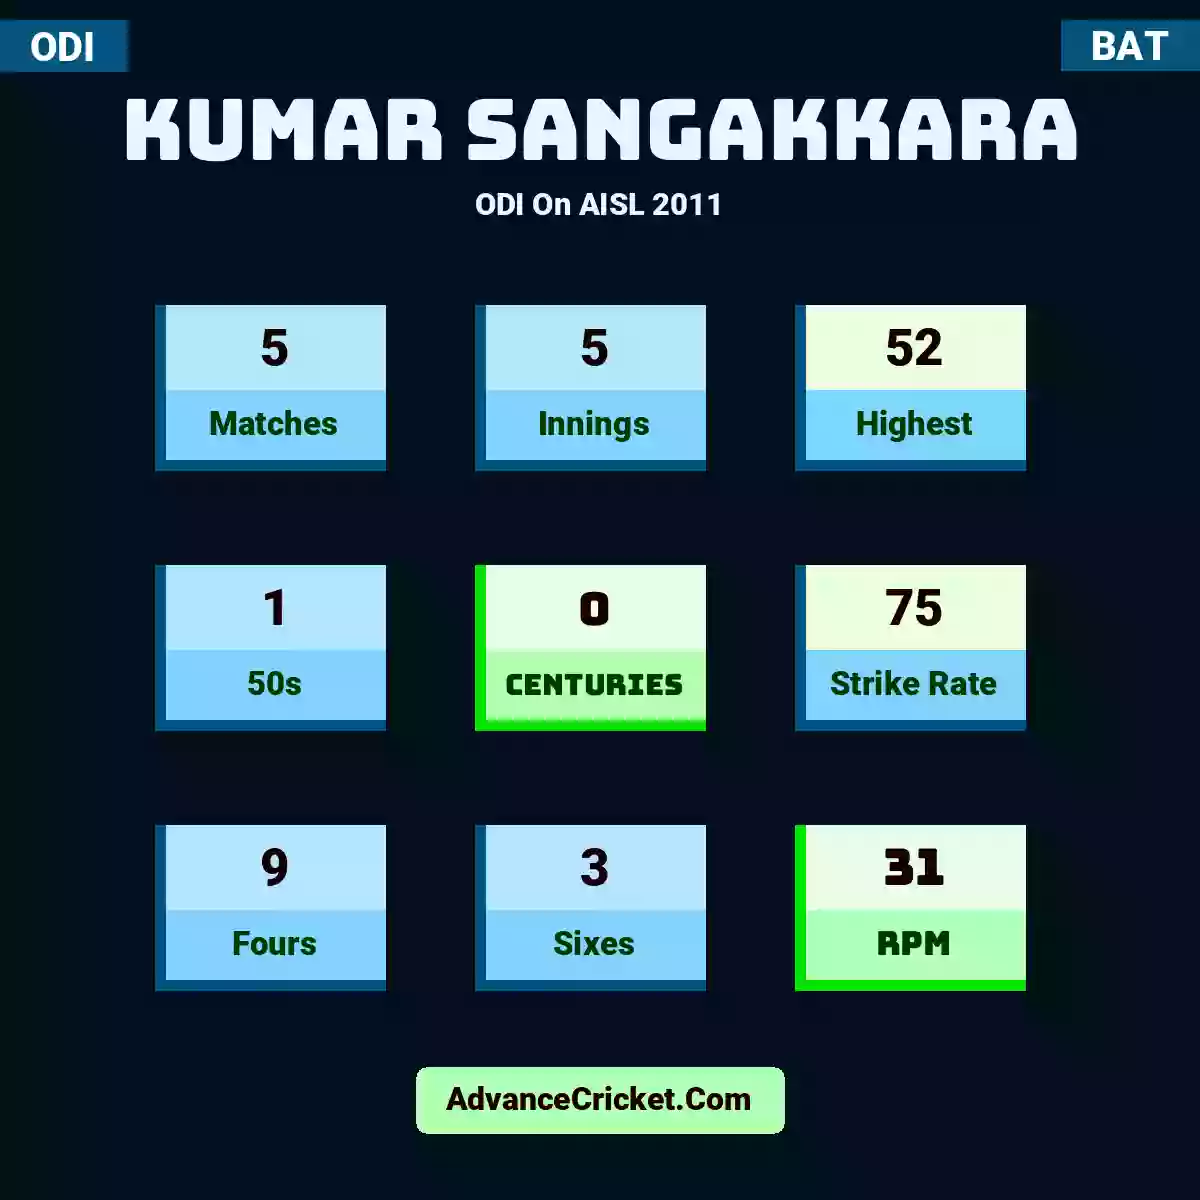 Kumar Sangakkara ODI  On AISL 2011, Kumar Sangakkara played 5 matches, scored 52 runs as highest, 1 half-centuries, and 0 centuries, with a strike rate of 75. K.Sangakkara hit 9 fours and 3 sixes, with an RPM of 31.